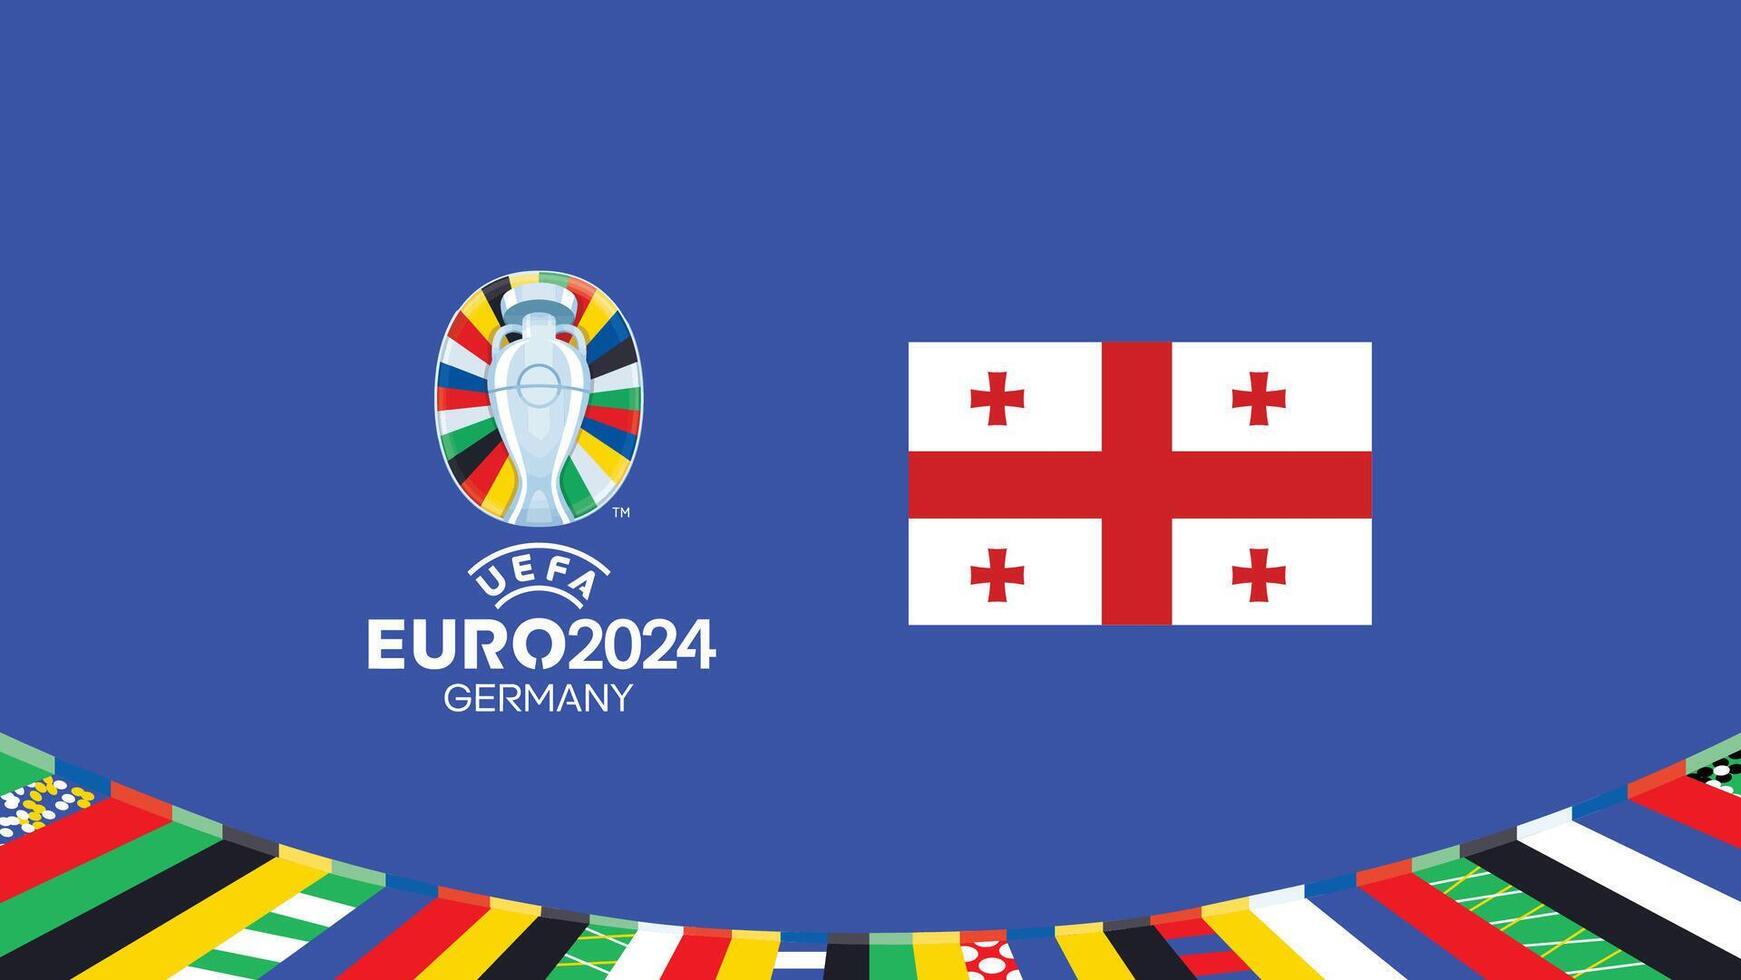 Euro 2024 Georgia Flag Emblem Teams Design With Official Symbol Logo Abstract Countries European Football Illustration vector